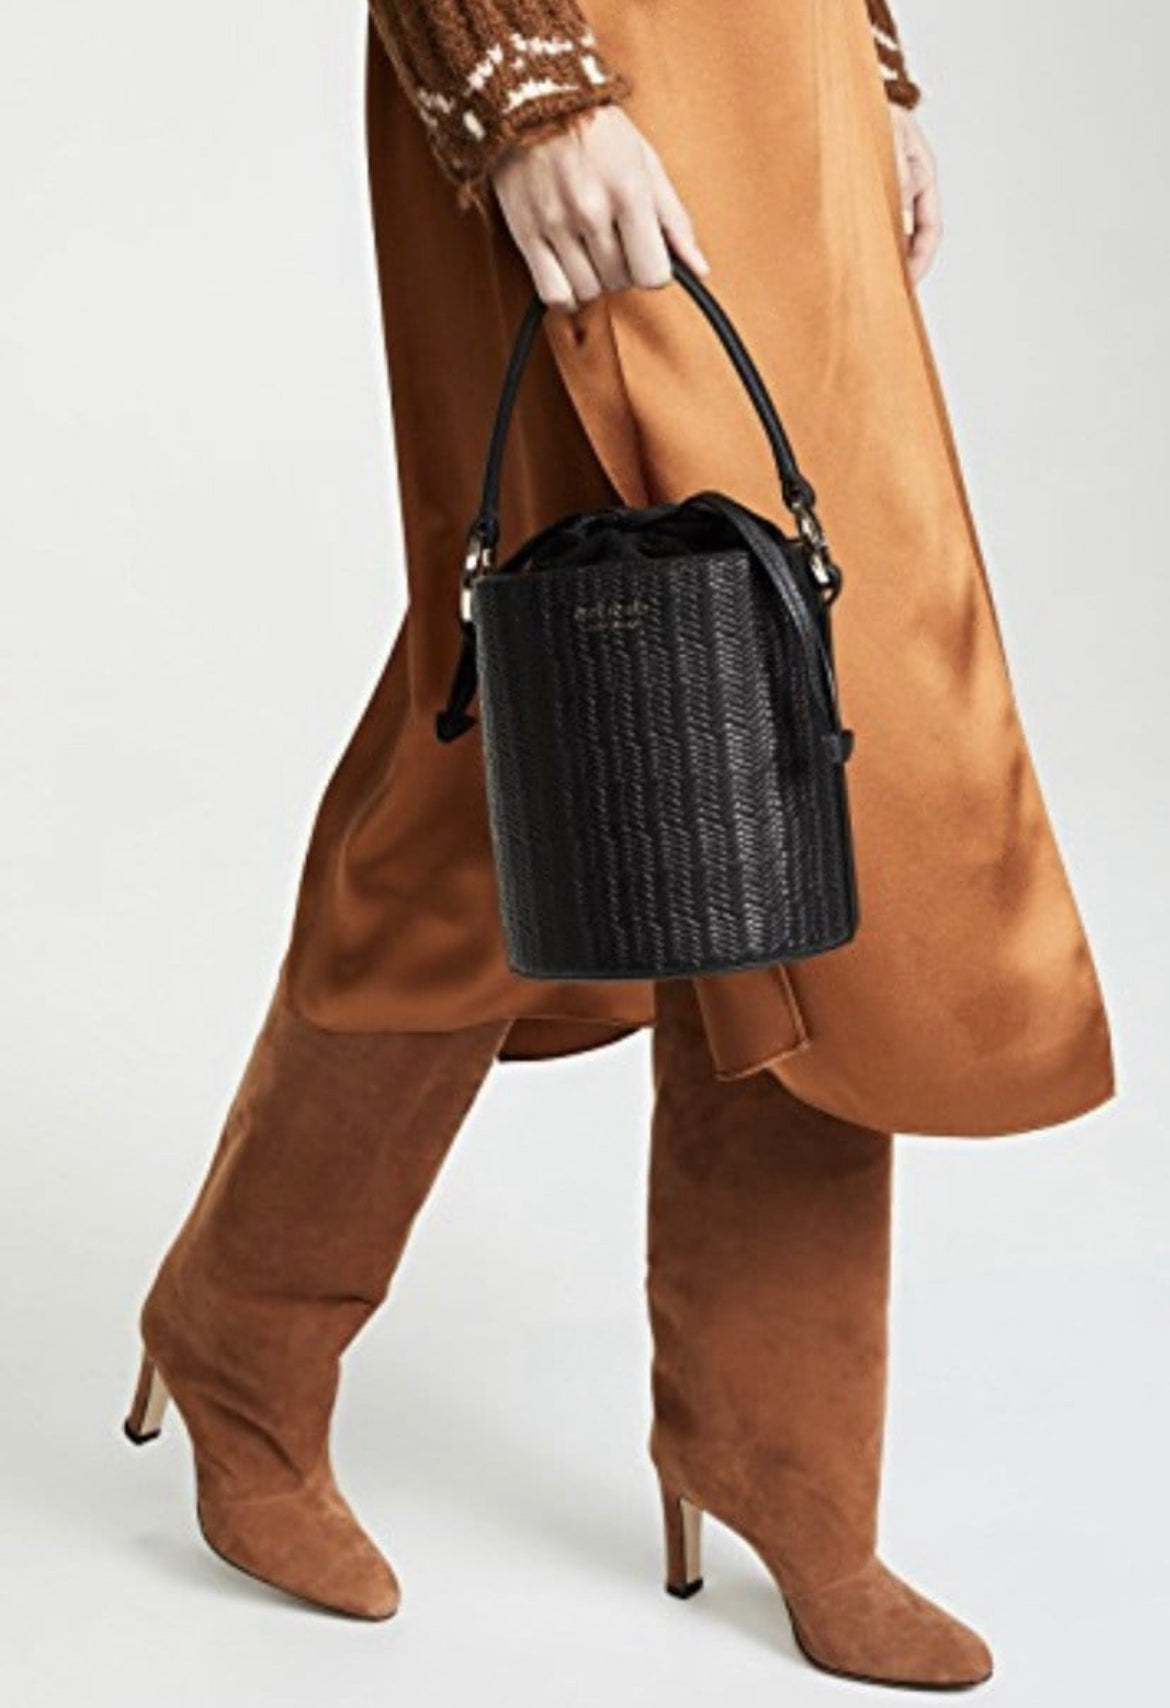 meli melo Santina Woven Mini Leather Bucket Bag ($525) ❤ liked on